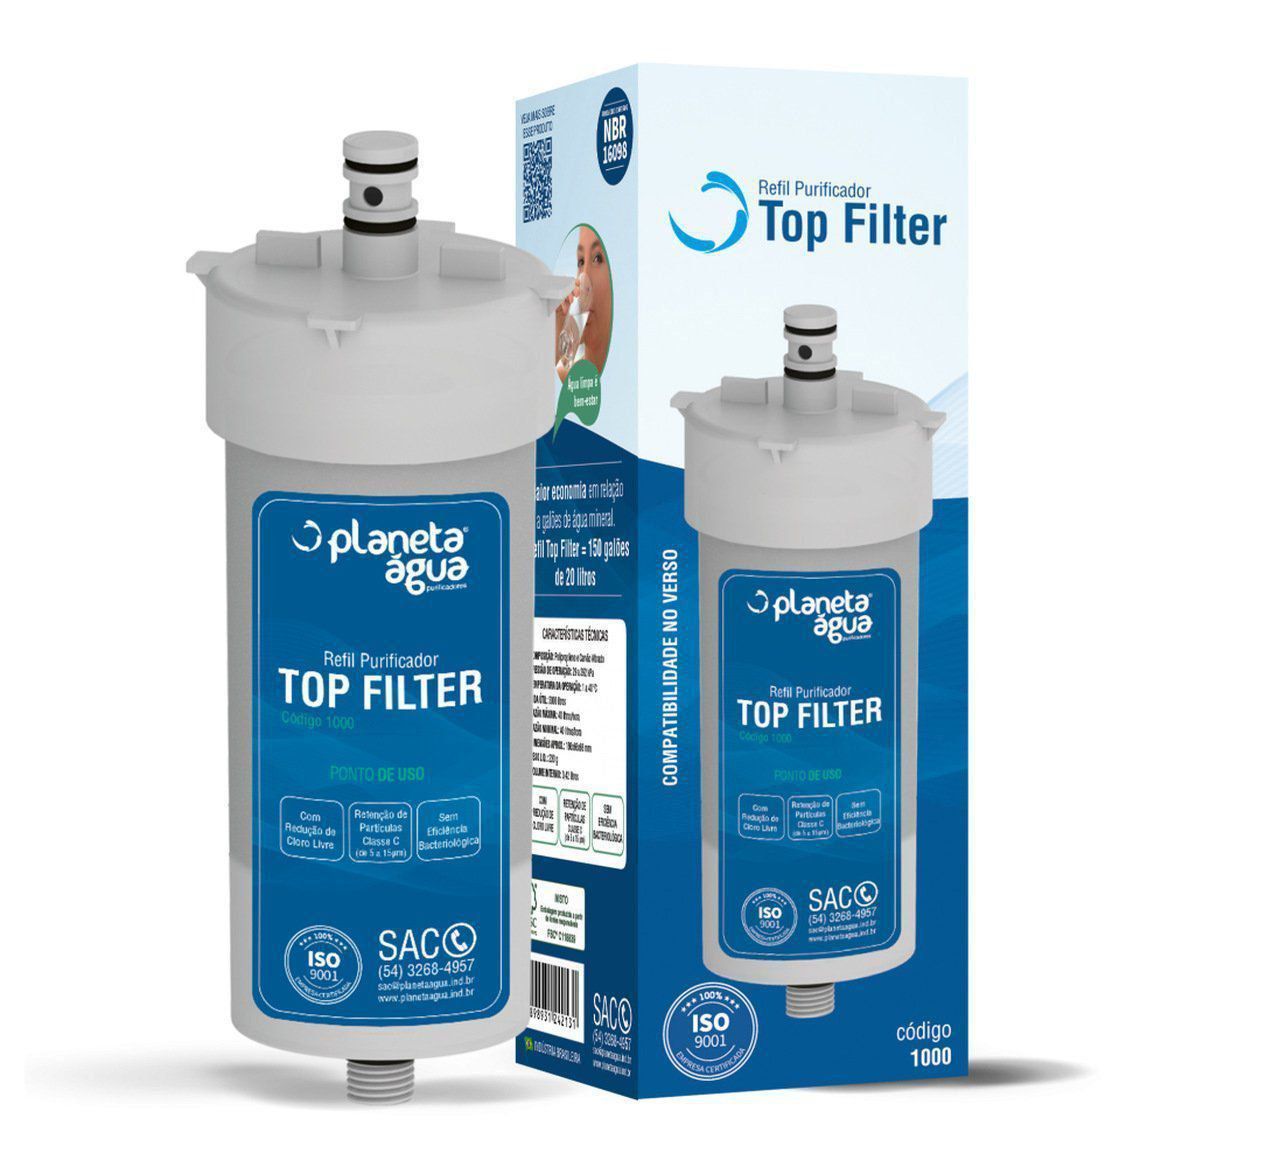 Refil Filtro Top Filter Impac Cristal Planeta Água